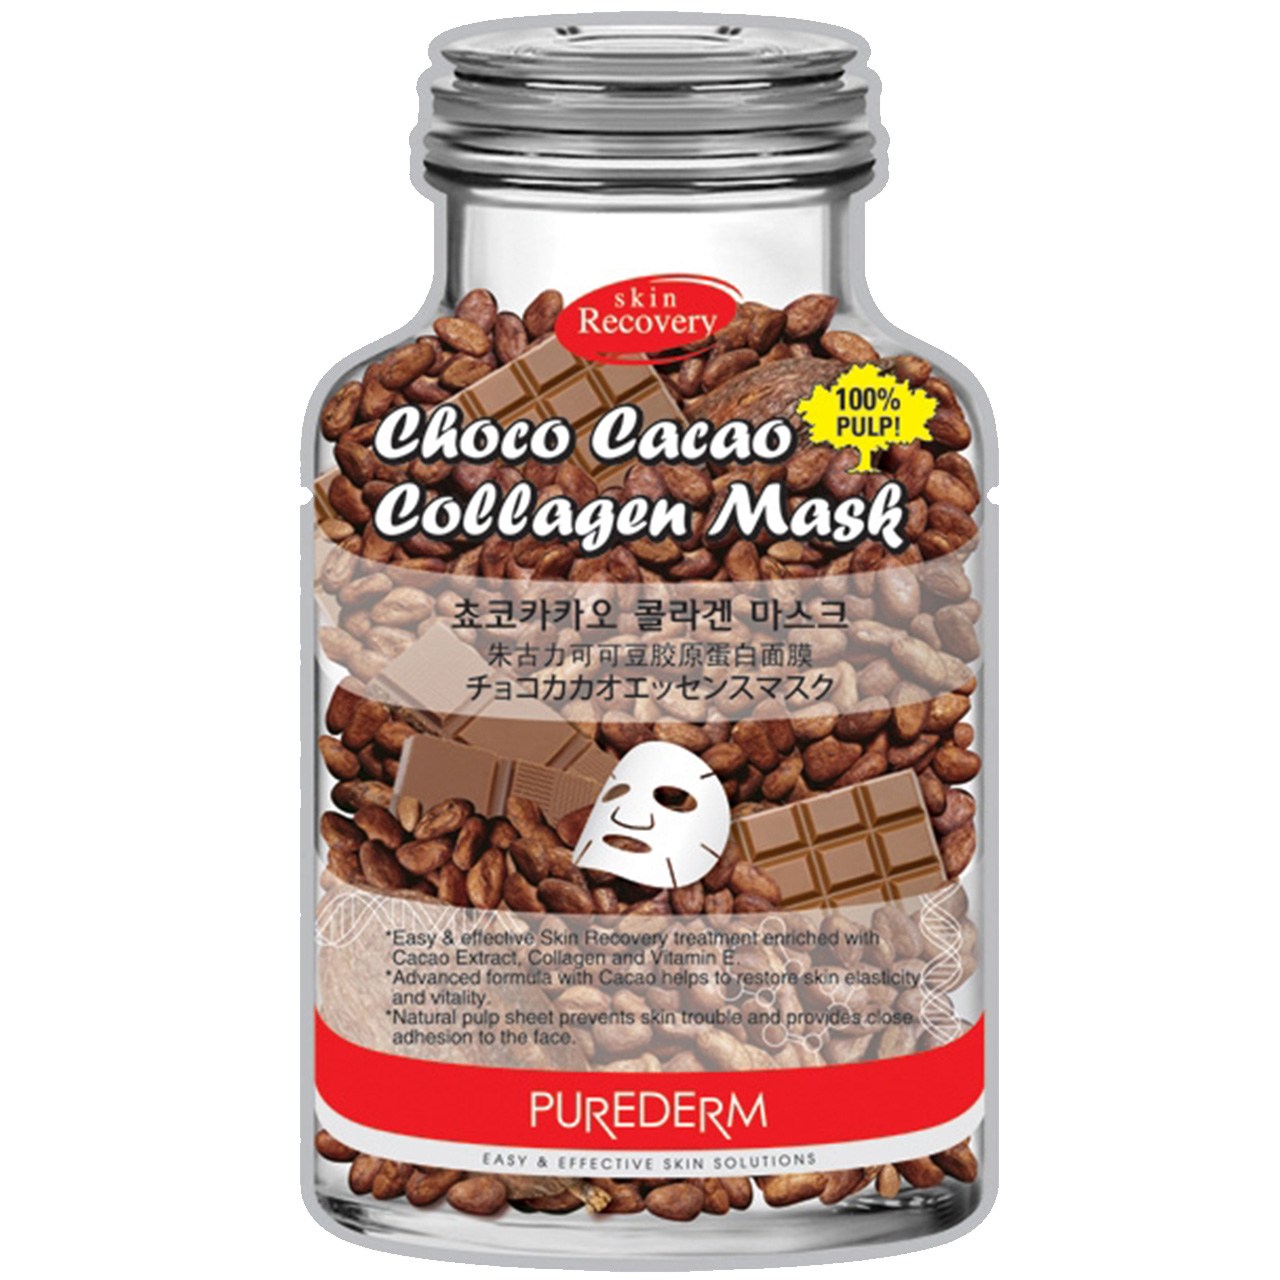 ماسک نقابی صورت پیوردرم مدل Choco Cacao - یک ورق